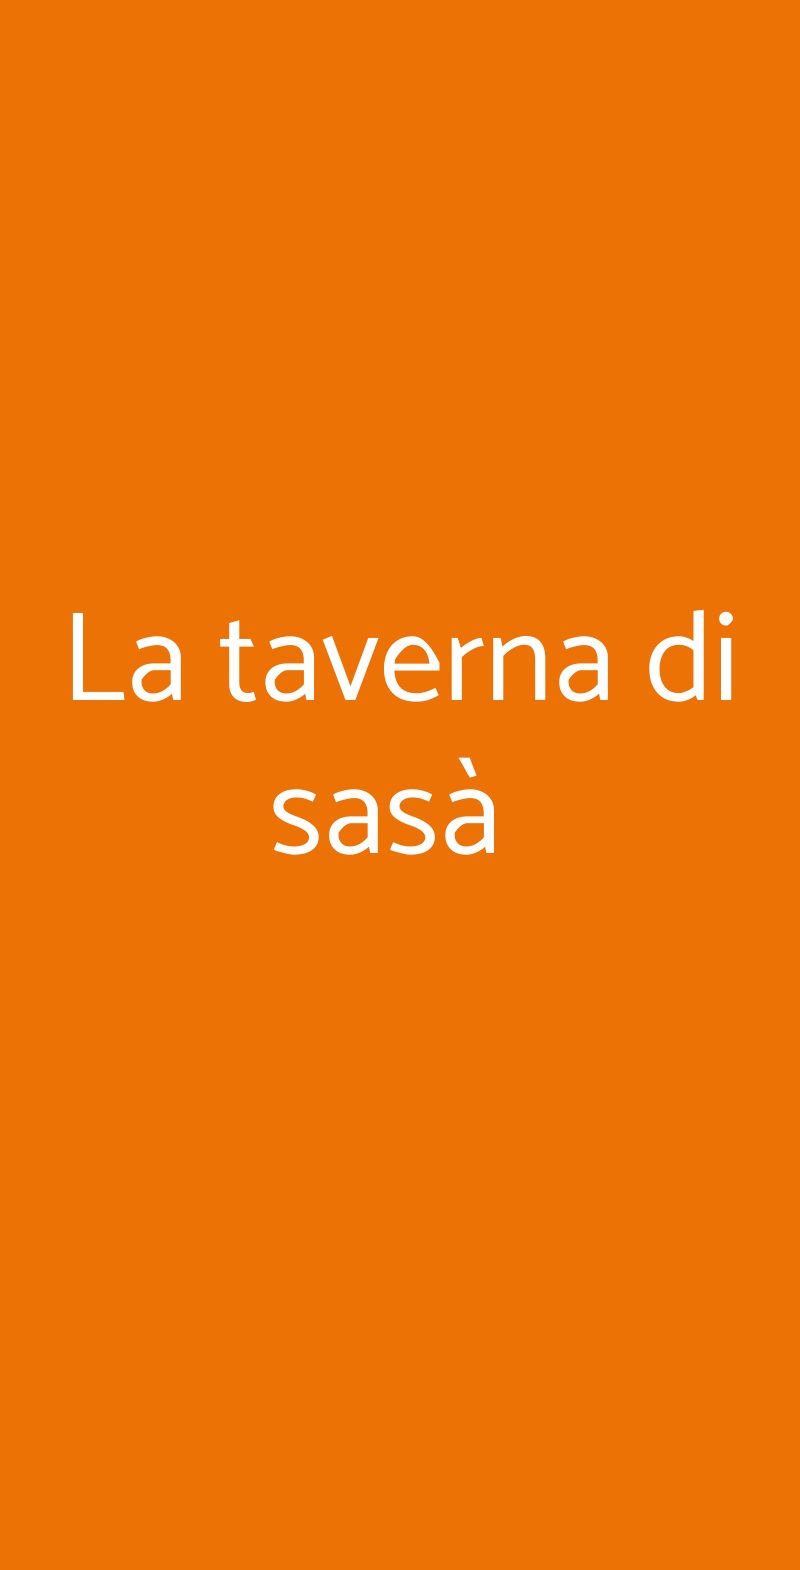 La taverna di sasà  Napoli menù 1 pagina